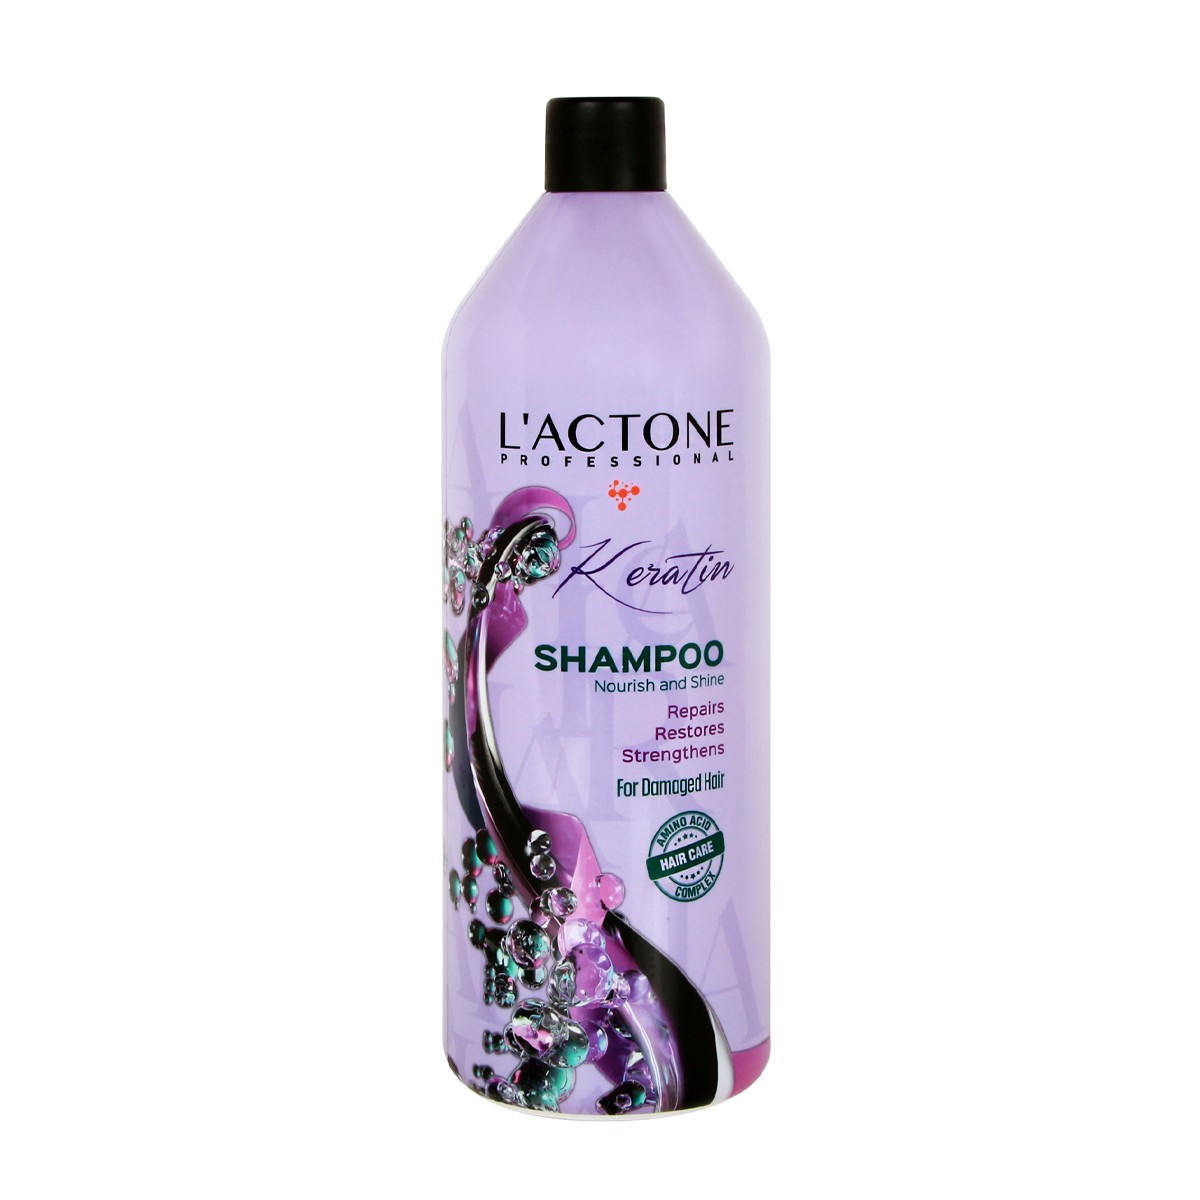 Professional Keratin Shampoo | Keratin Şampuan 1000 ML